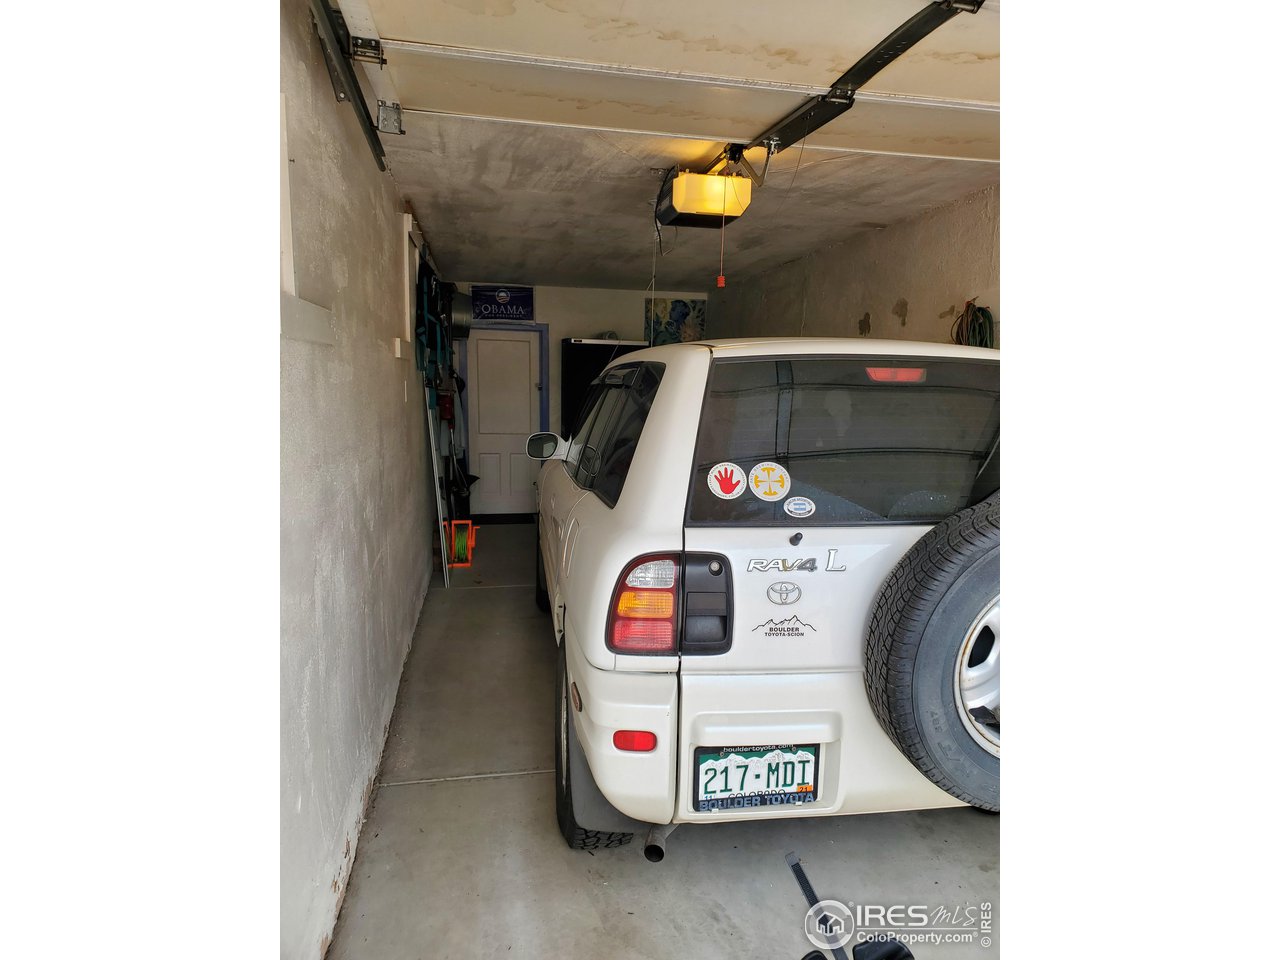 Garage bay with car inside